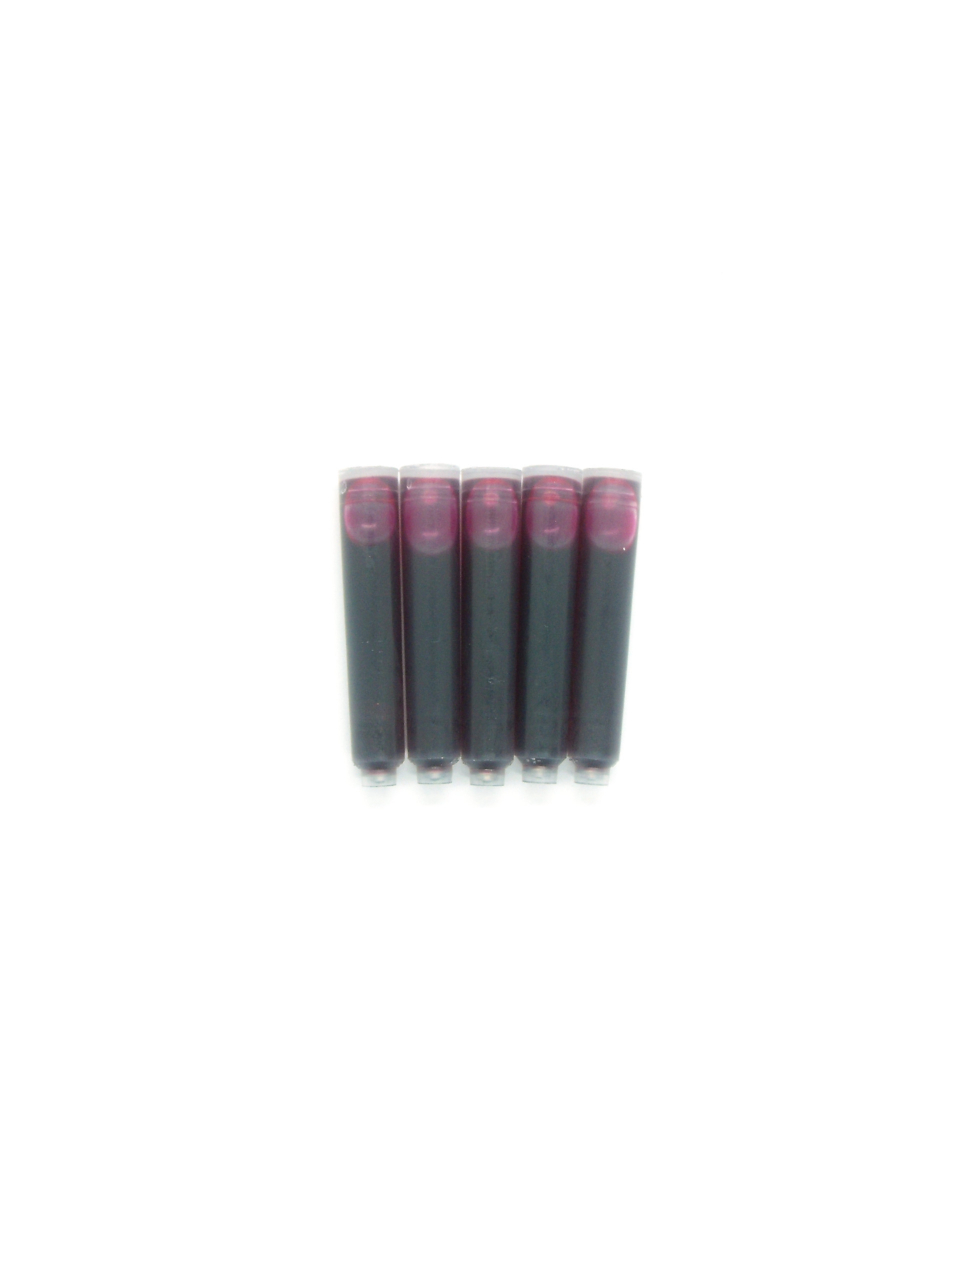 PenConverter Ink Cartridges For Jacques Herbin Fountain Pens (Pink)